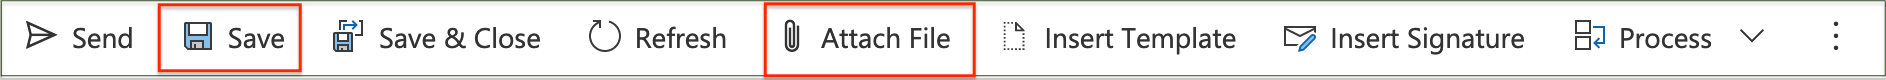 email attach file icon